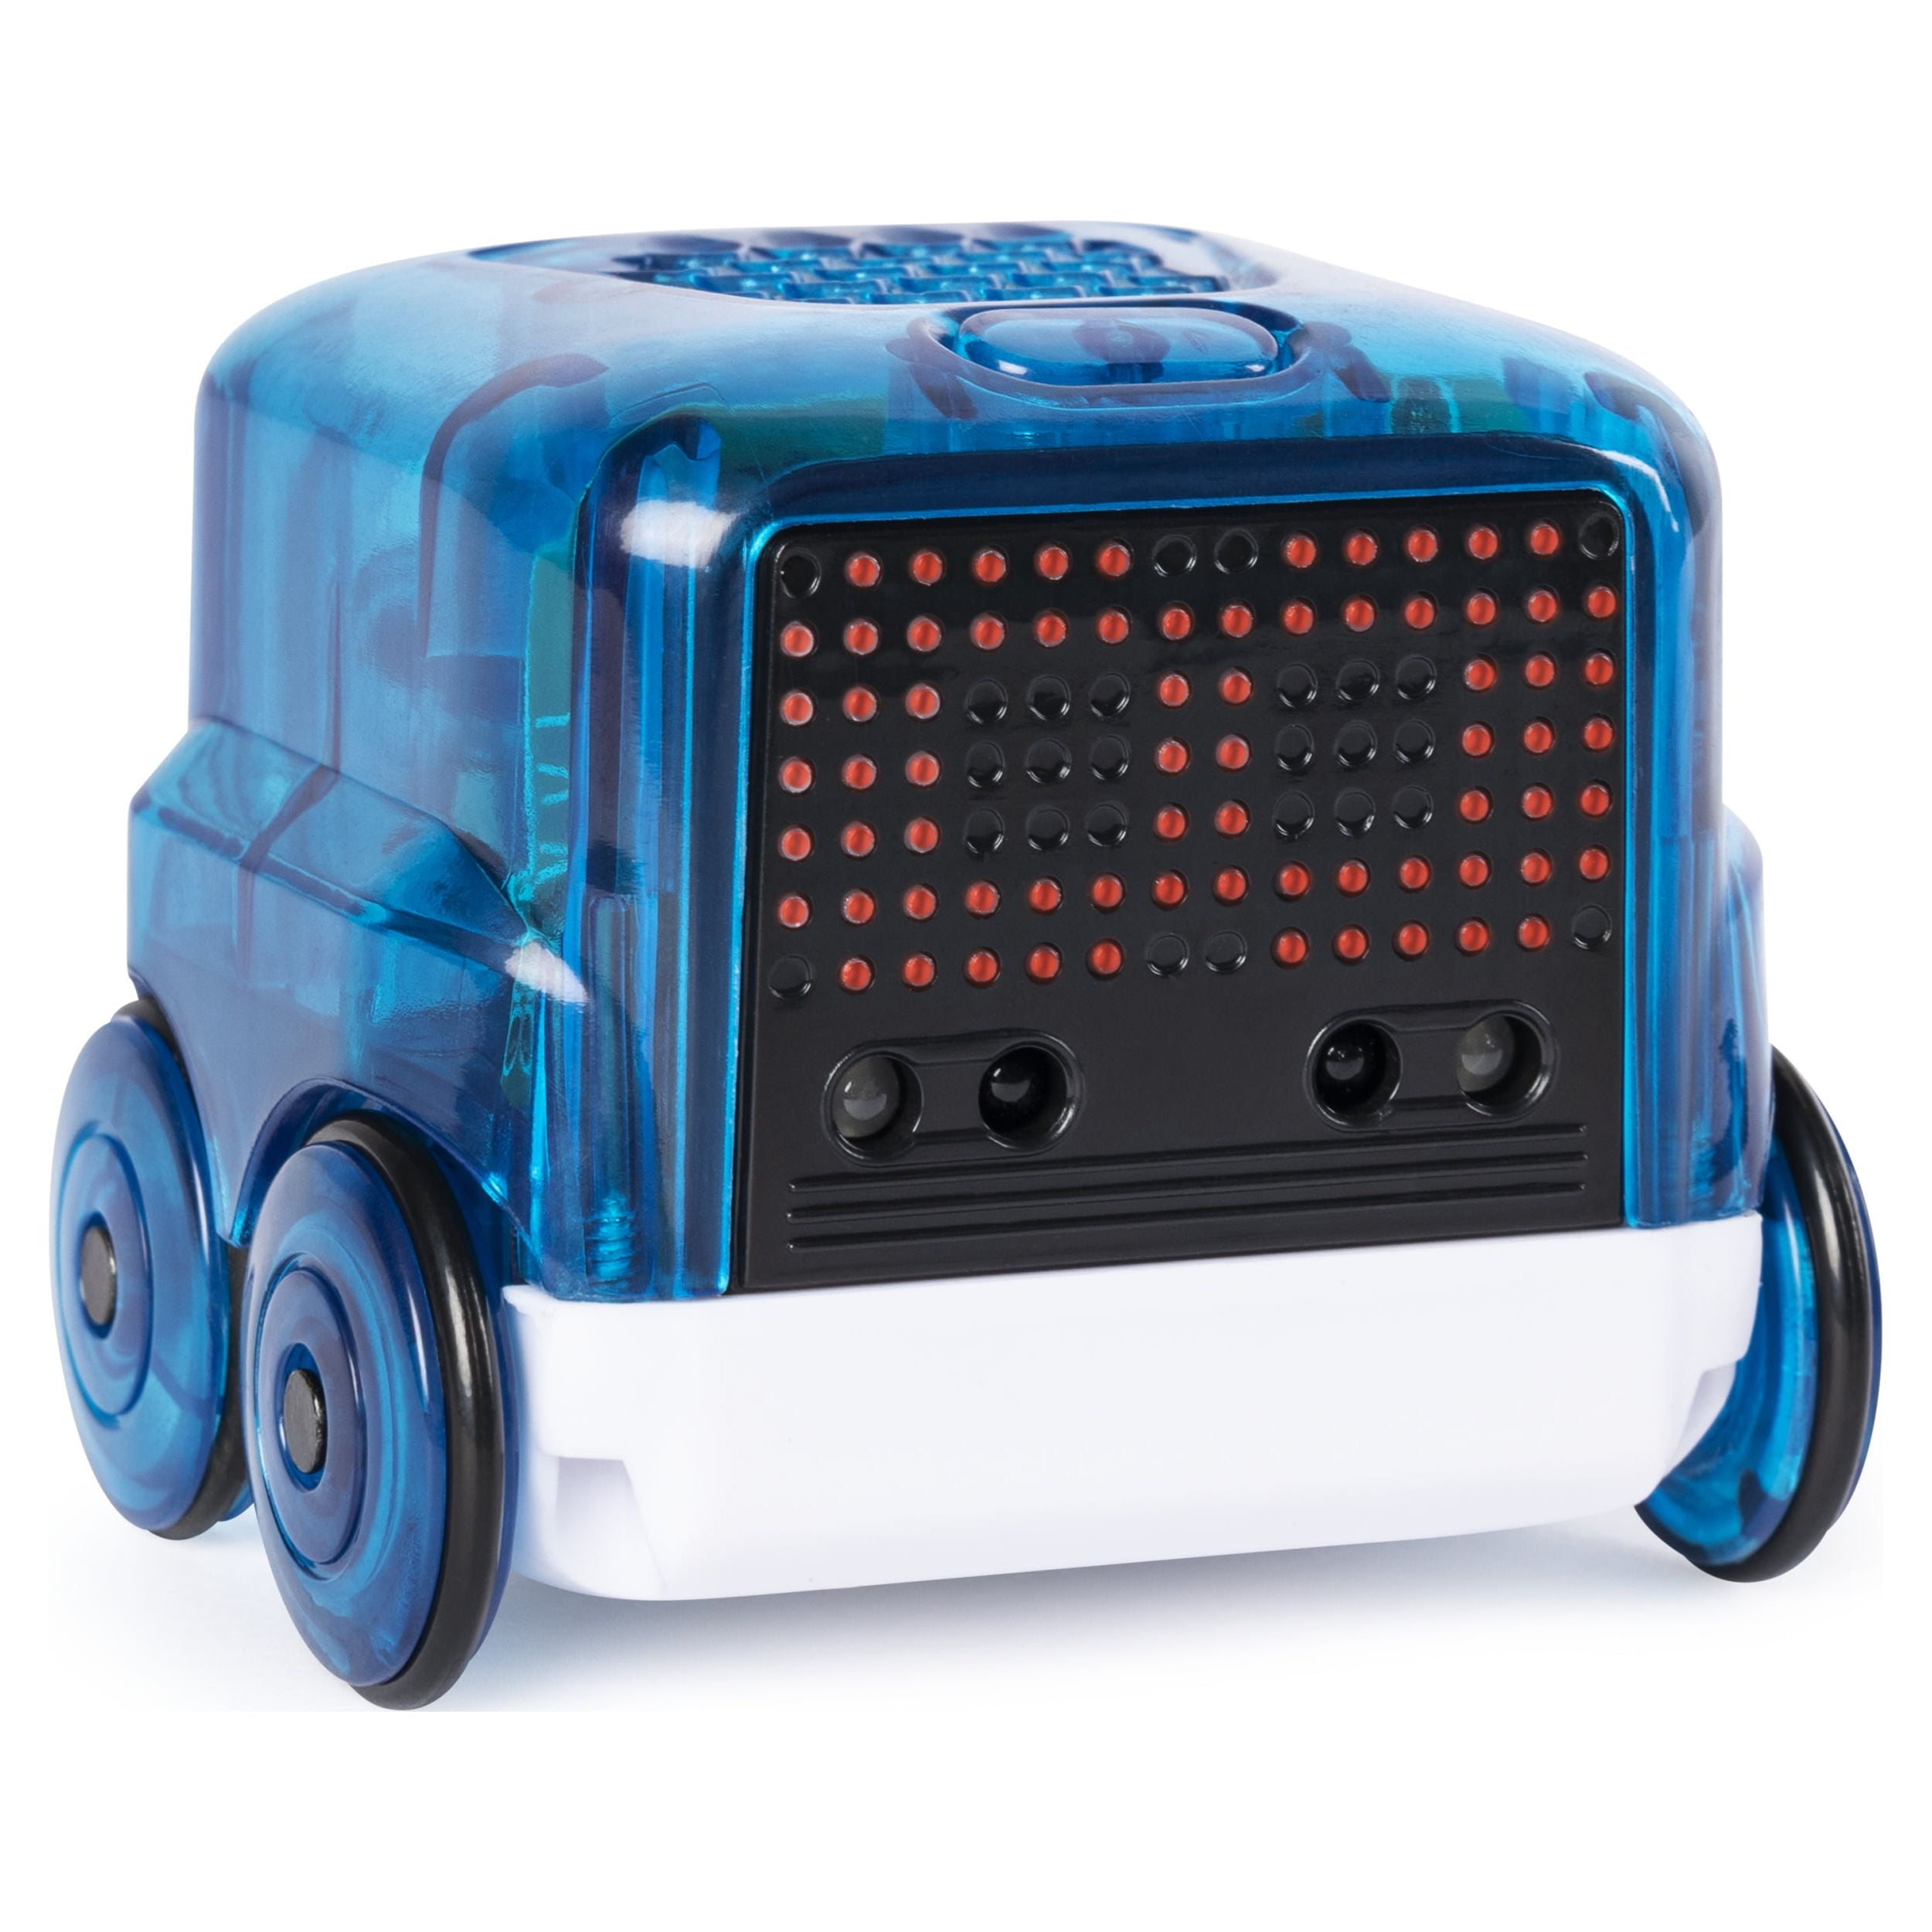 CM Travel Case for Novie Robot Interactive Smart Robot - Includes Blue Case  Only